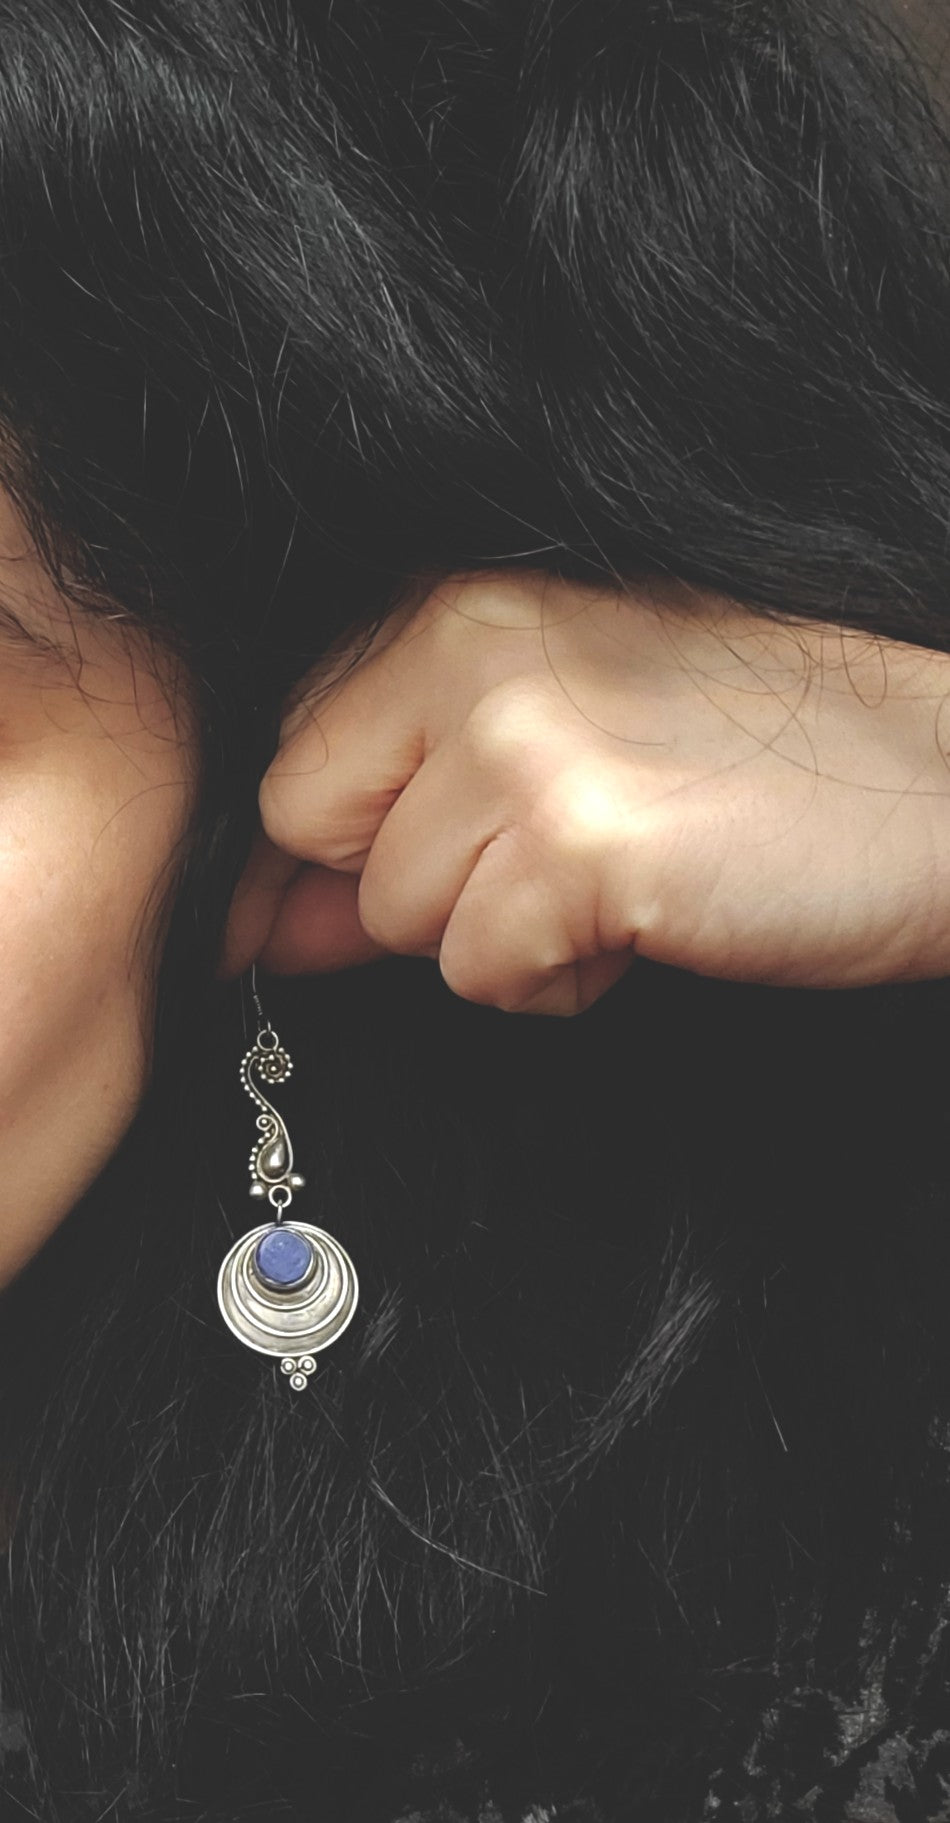 Lapis Lazuli Dangle Earrings from India